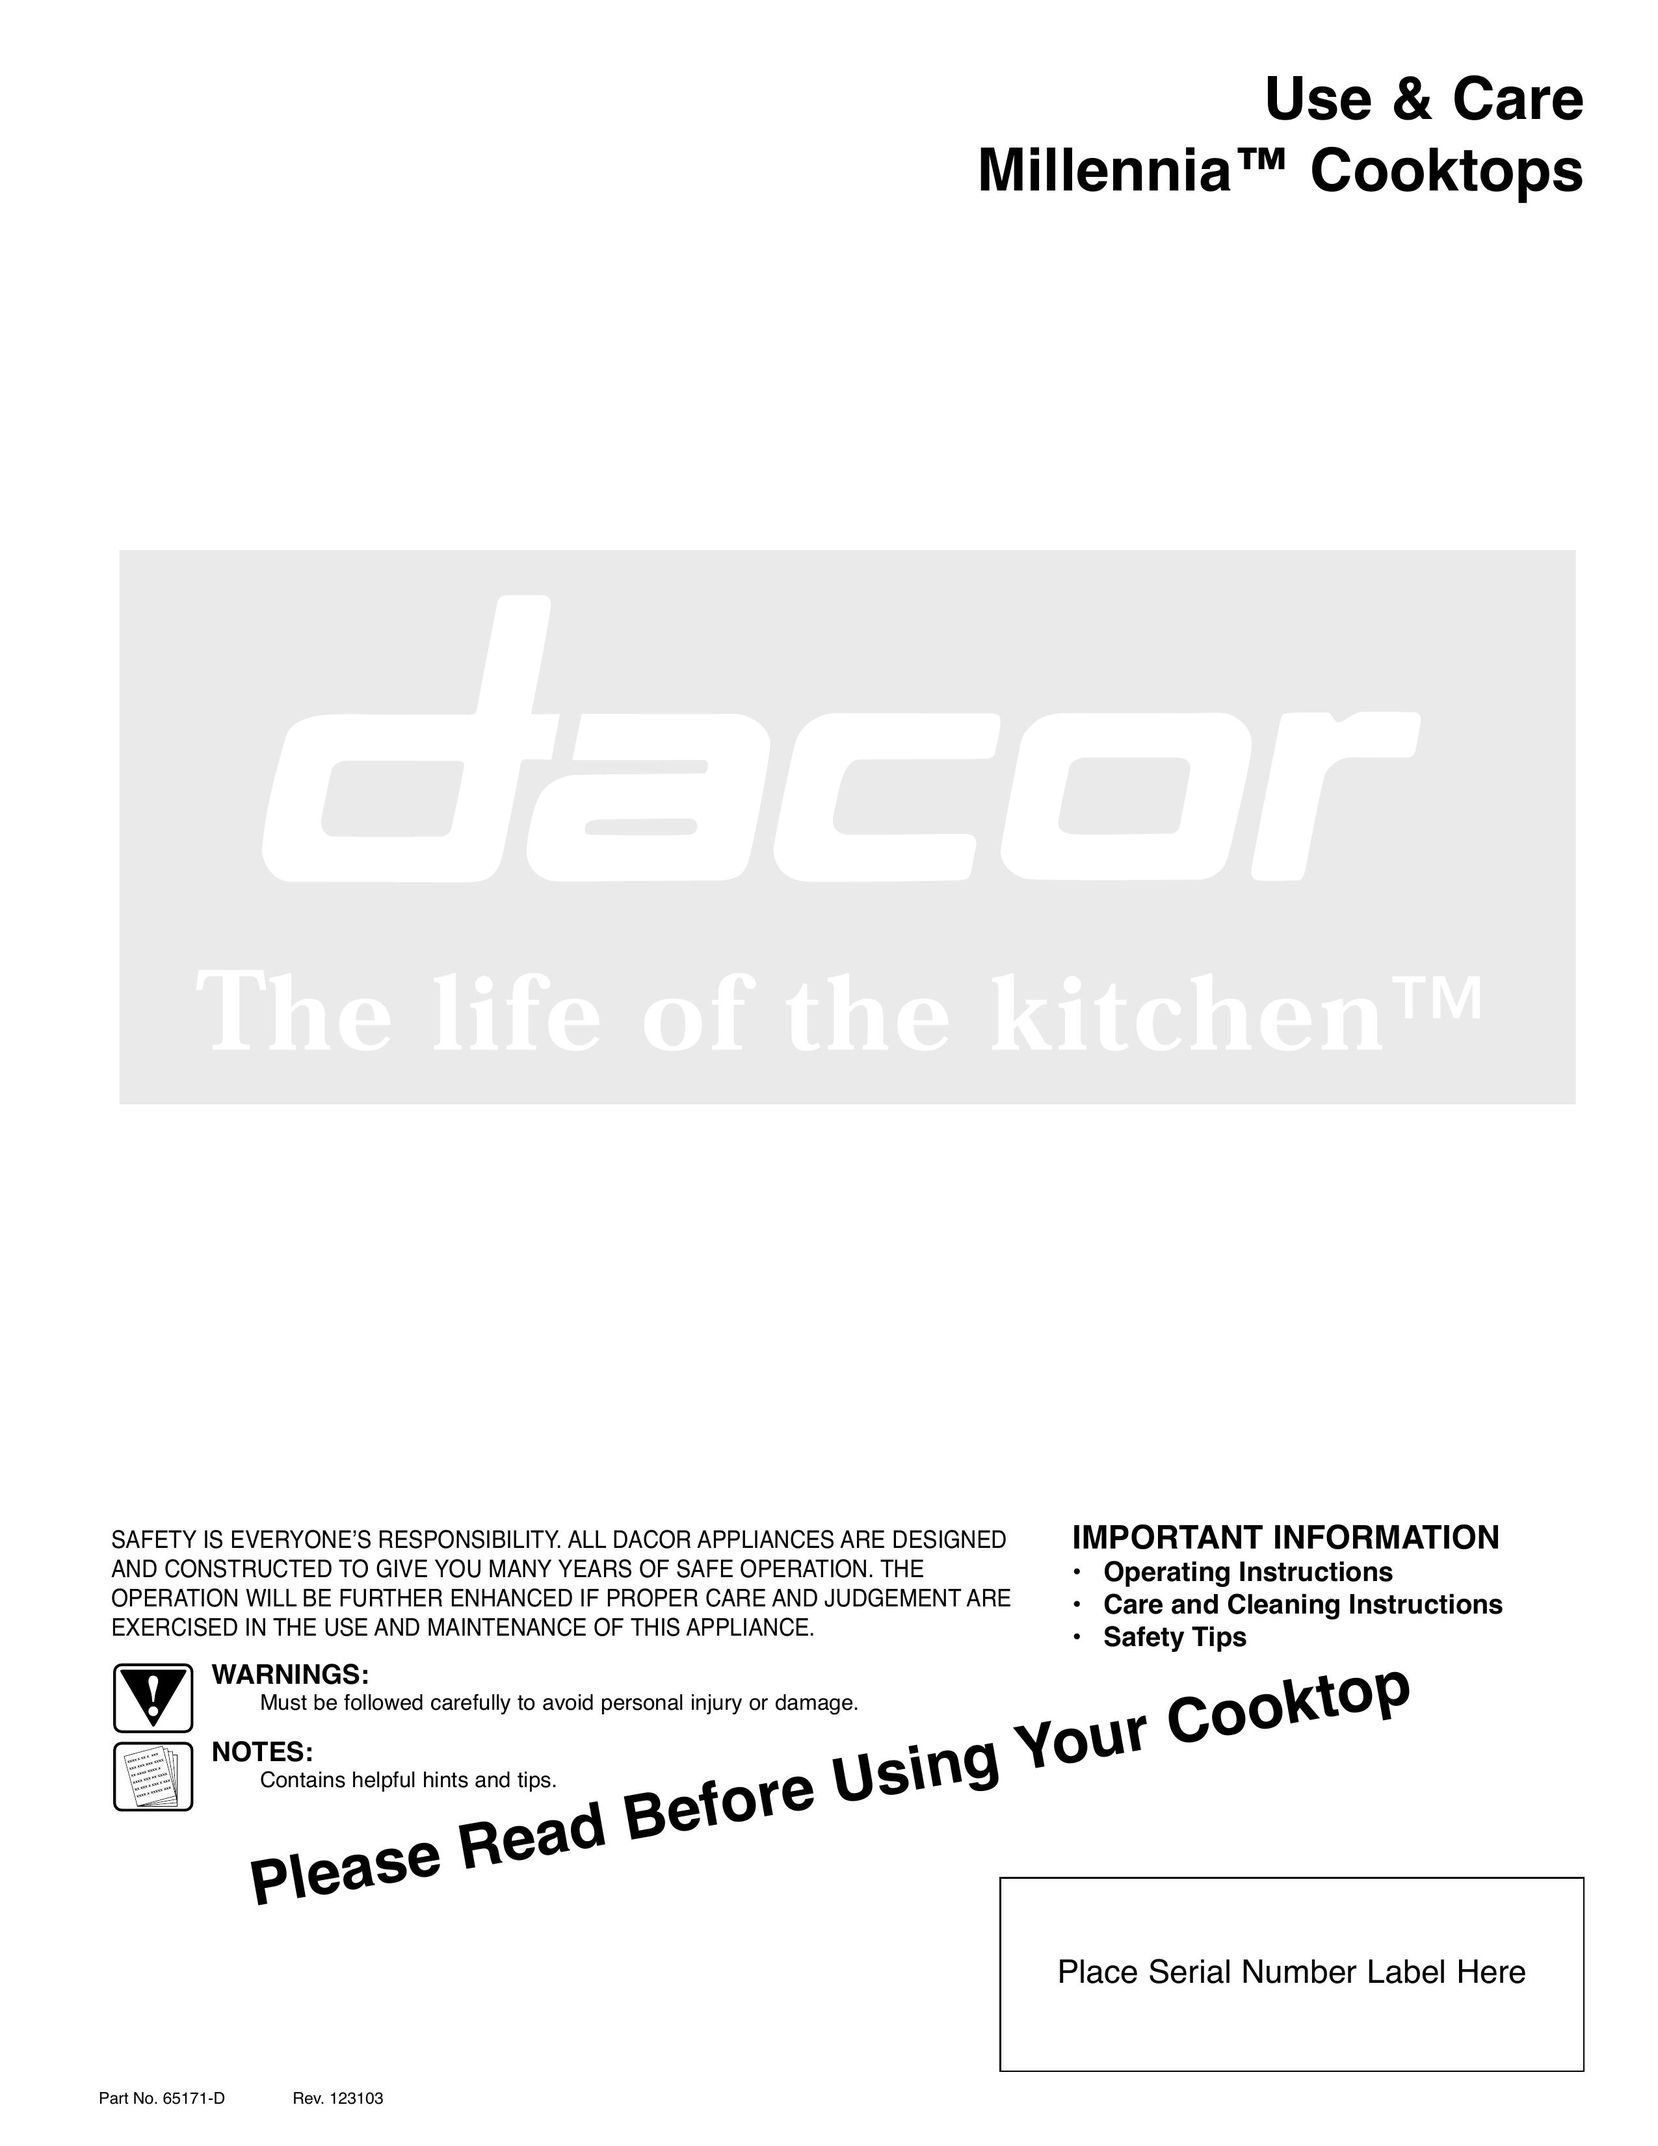 Dacor ETT304 Cooktop User Manual